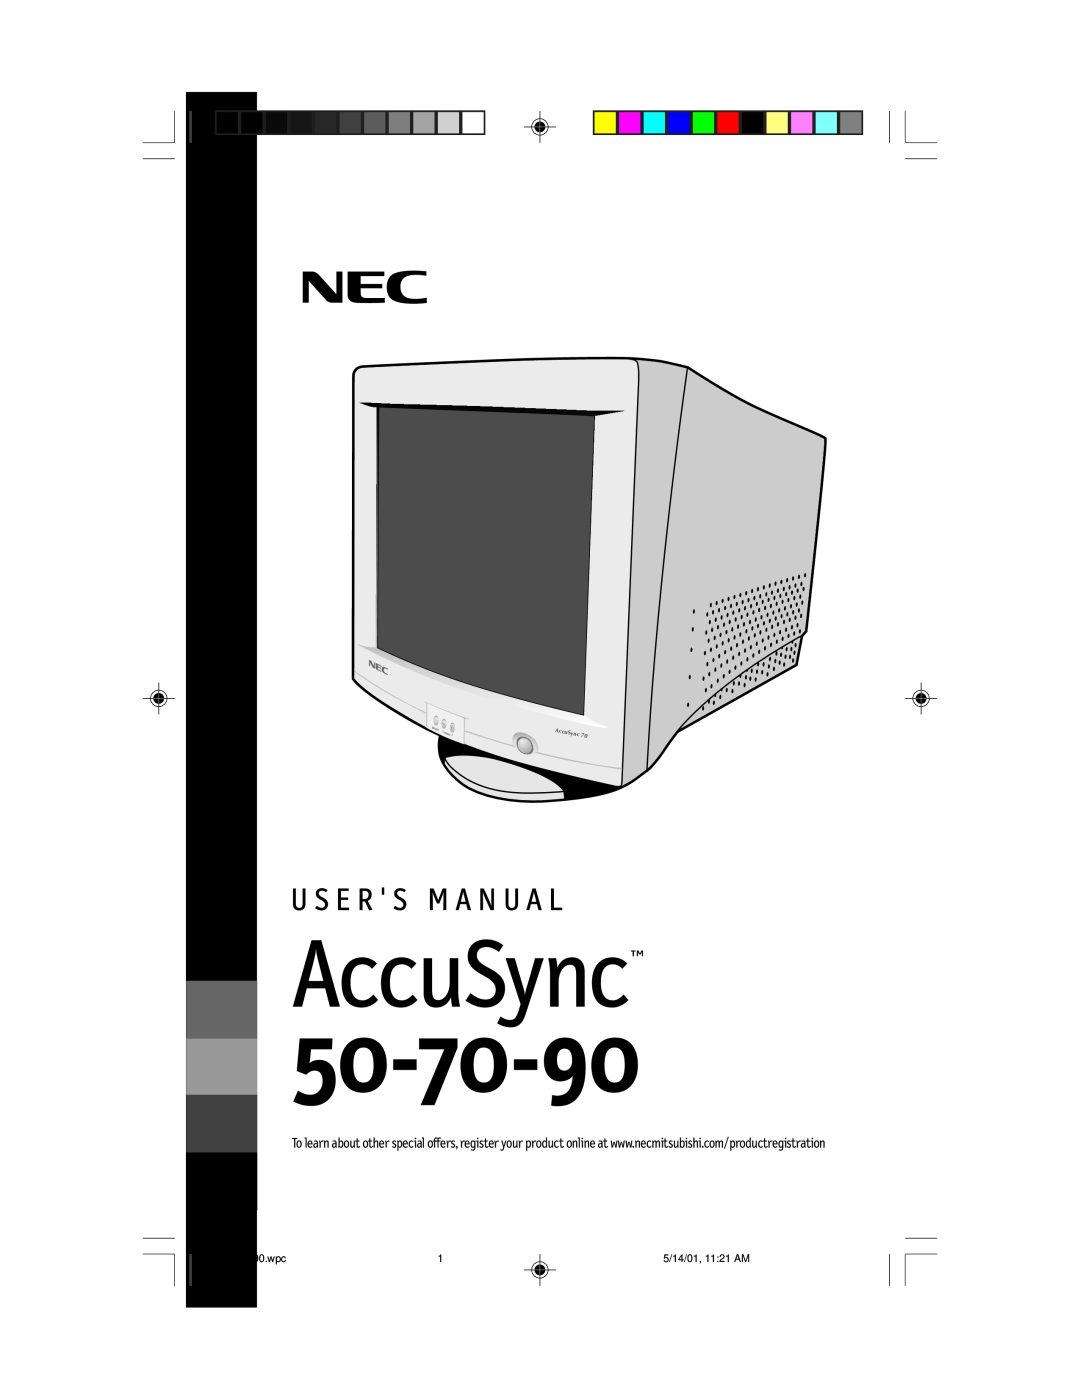 NEC AccuSync 70, AccuSync 90, AccuSync 50 user manual 50-70-90, U S E R S M A N U A L, AS507090.wpc, 5/14/01, 1121 AM 